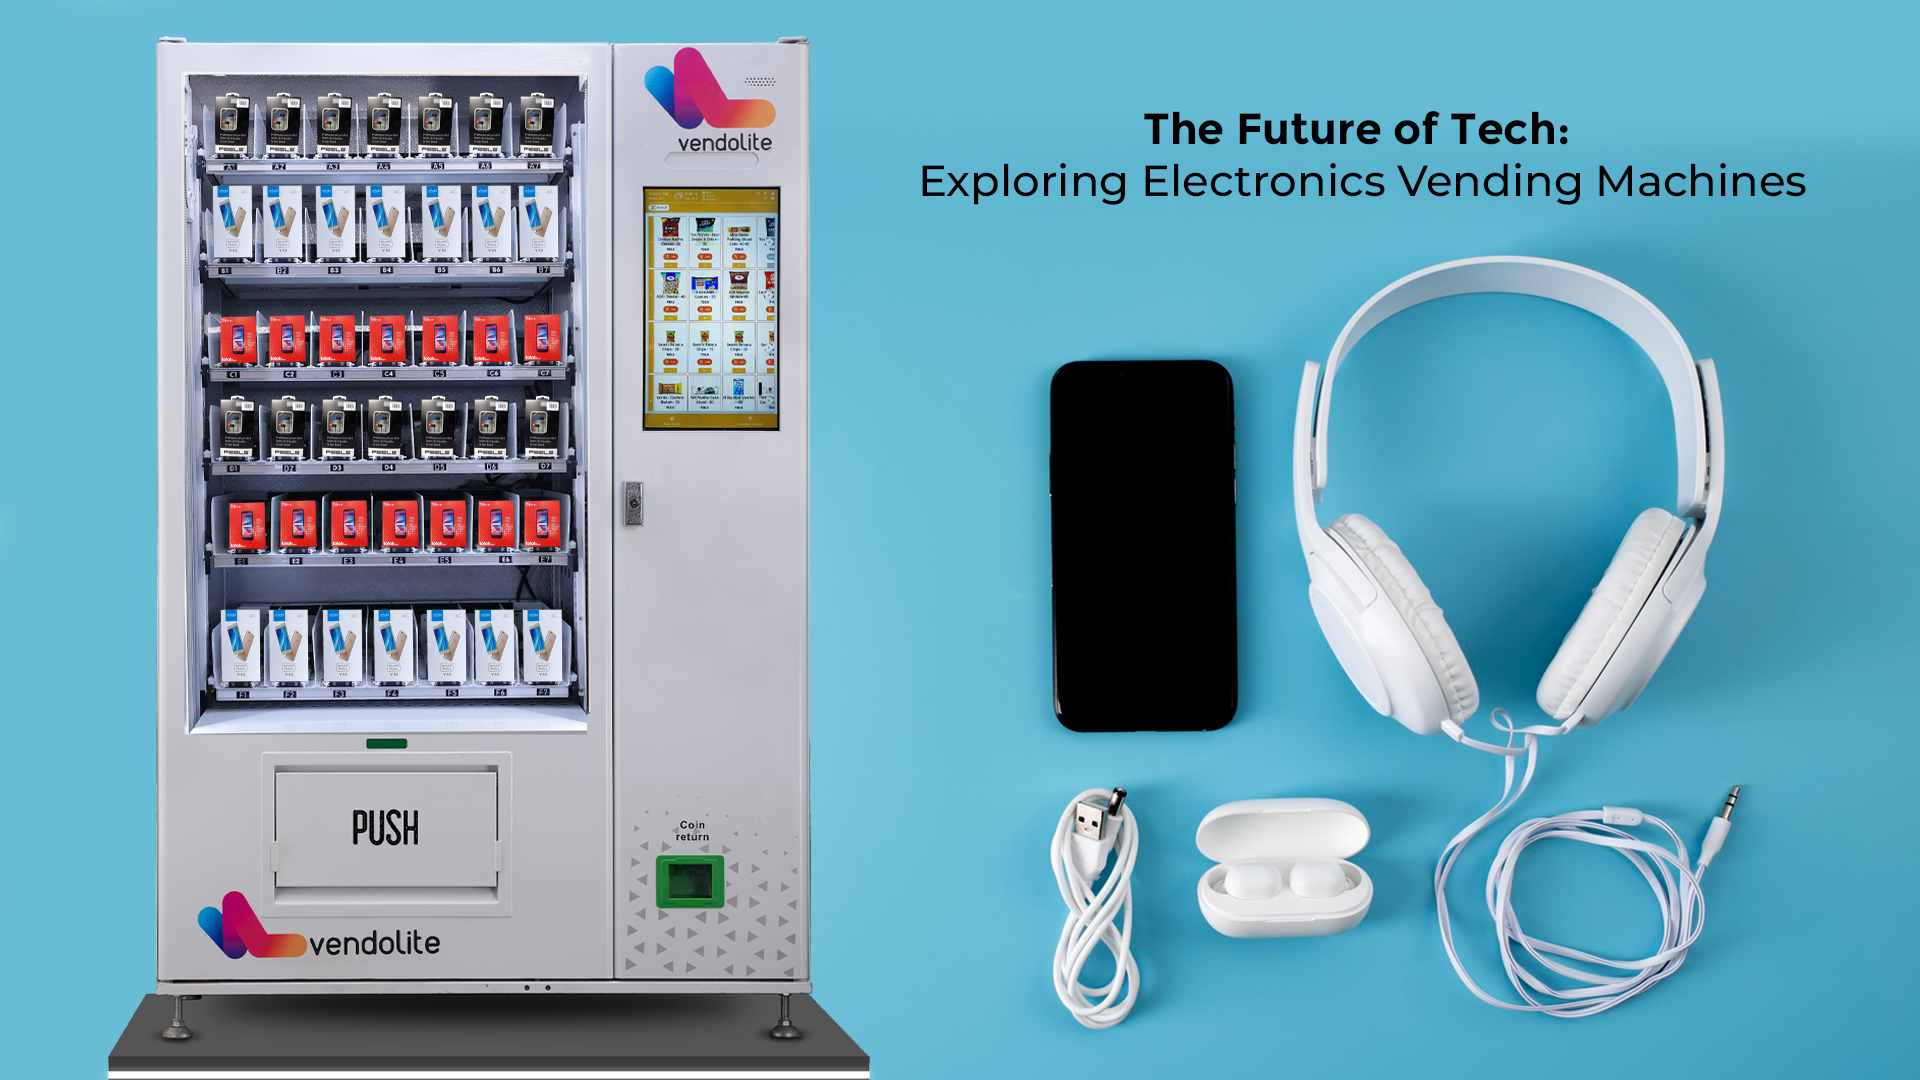 The Future of Tech: Exploring Electronics Vending Machines